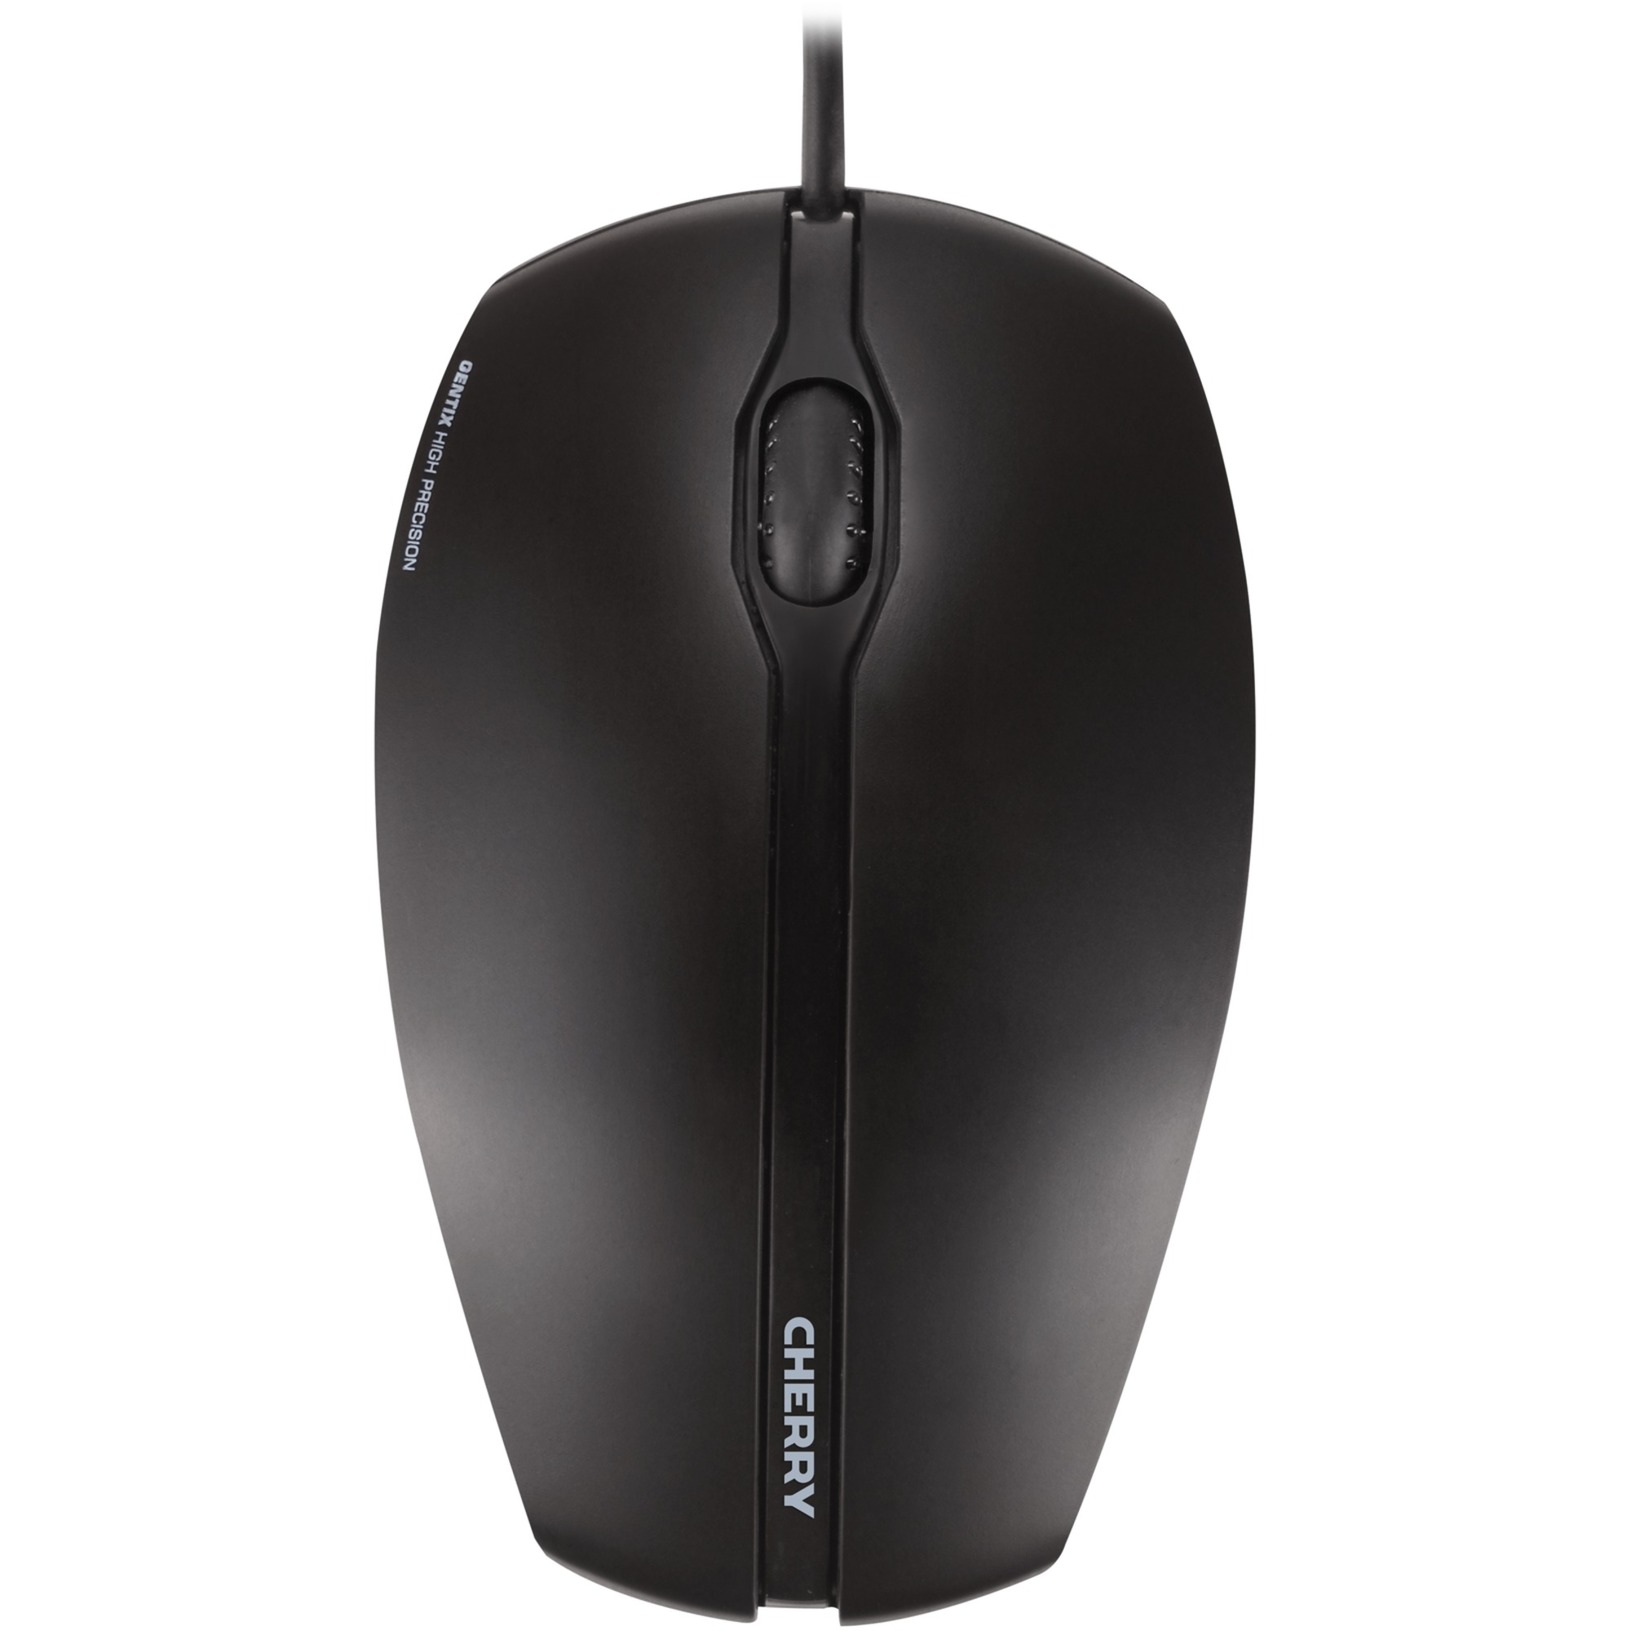 Image of Alternate - GENTIX Corded Optical Mouse, Maus online einkaufen bei Alternate